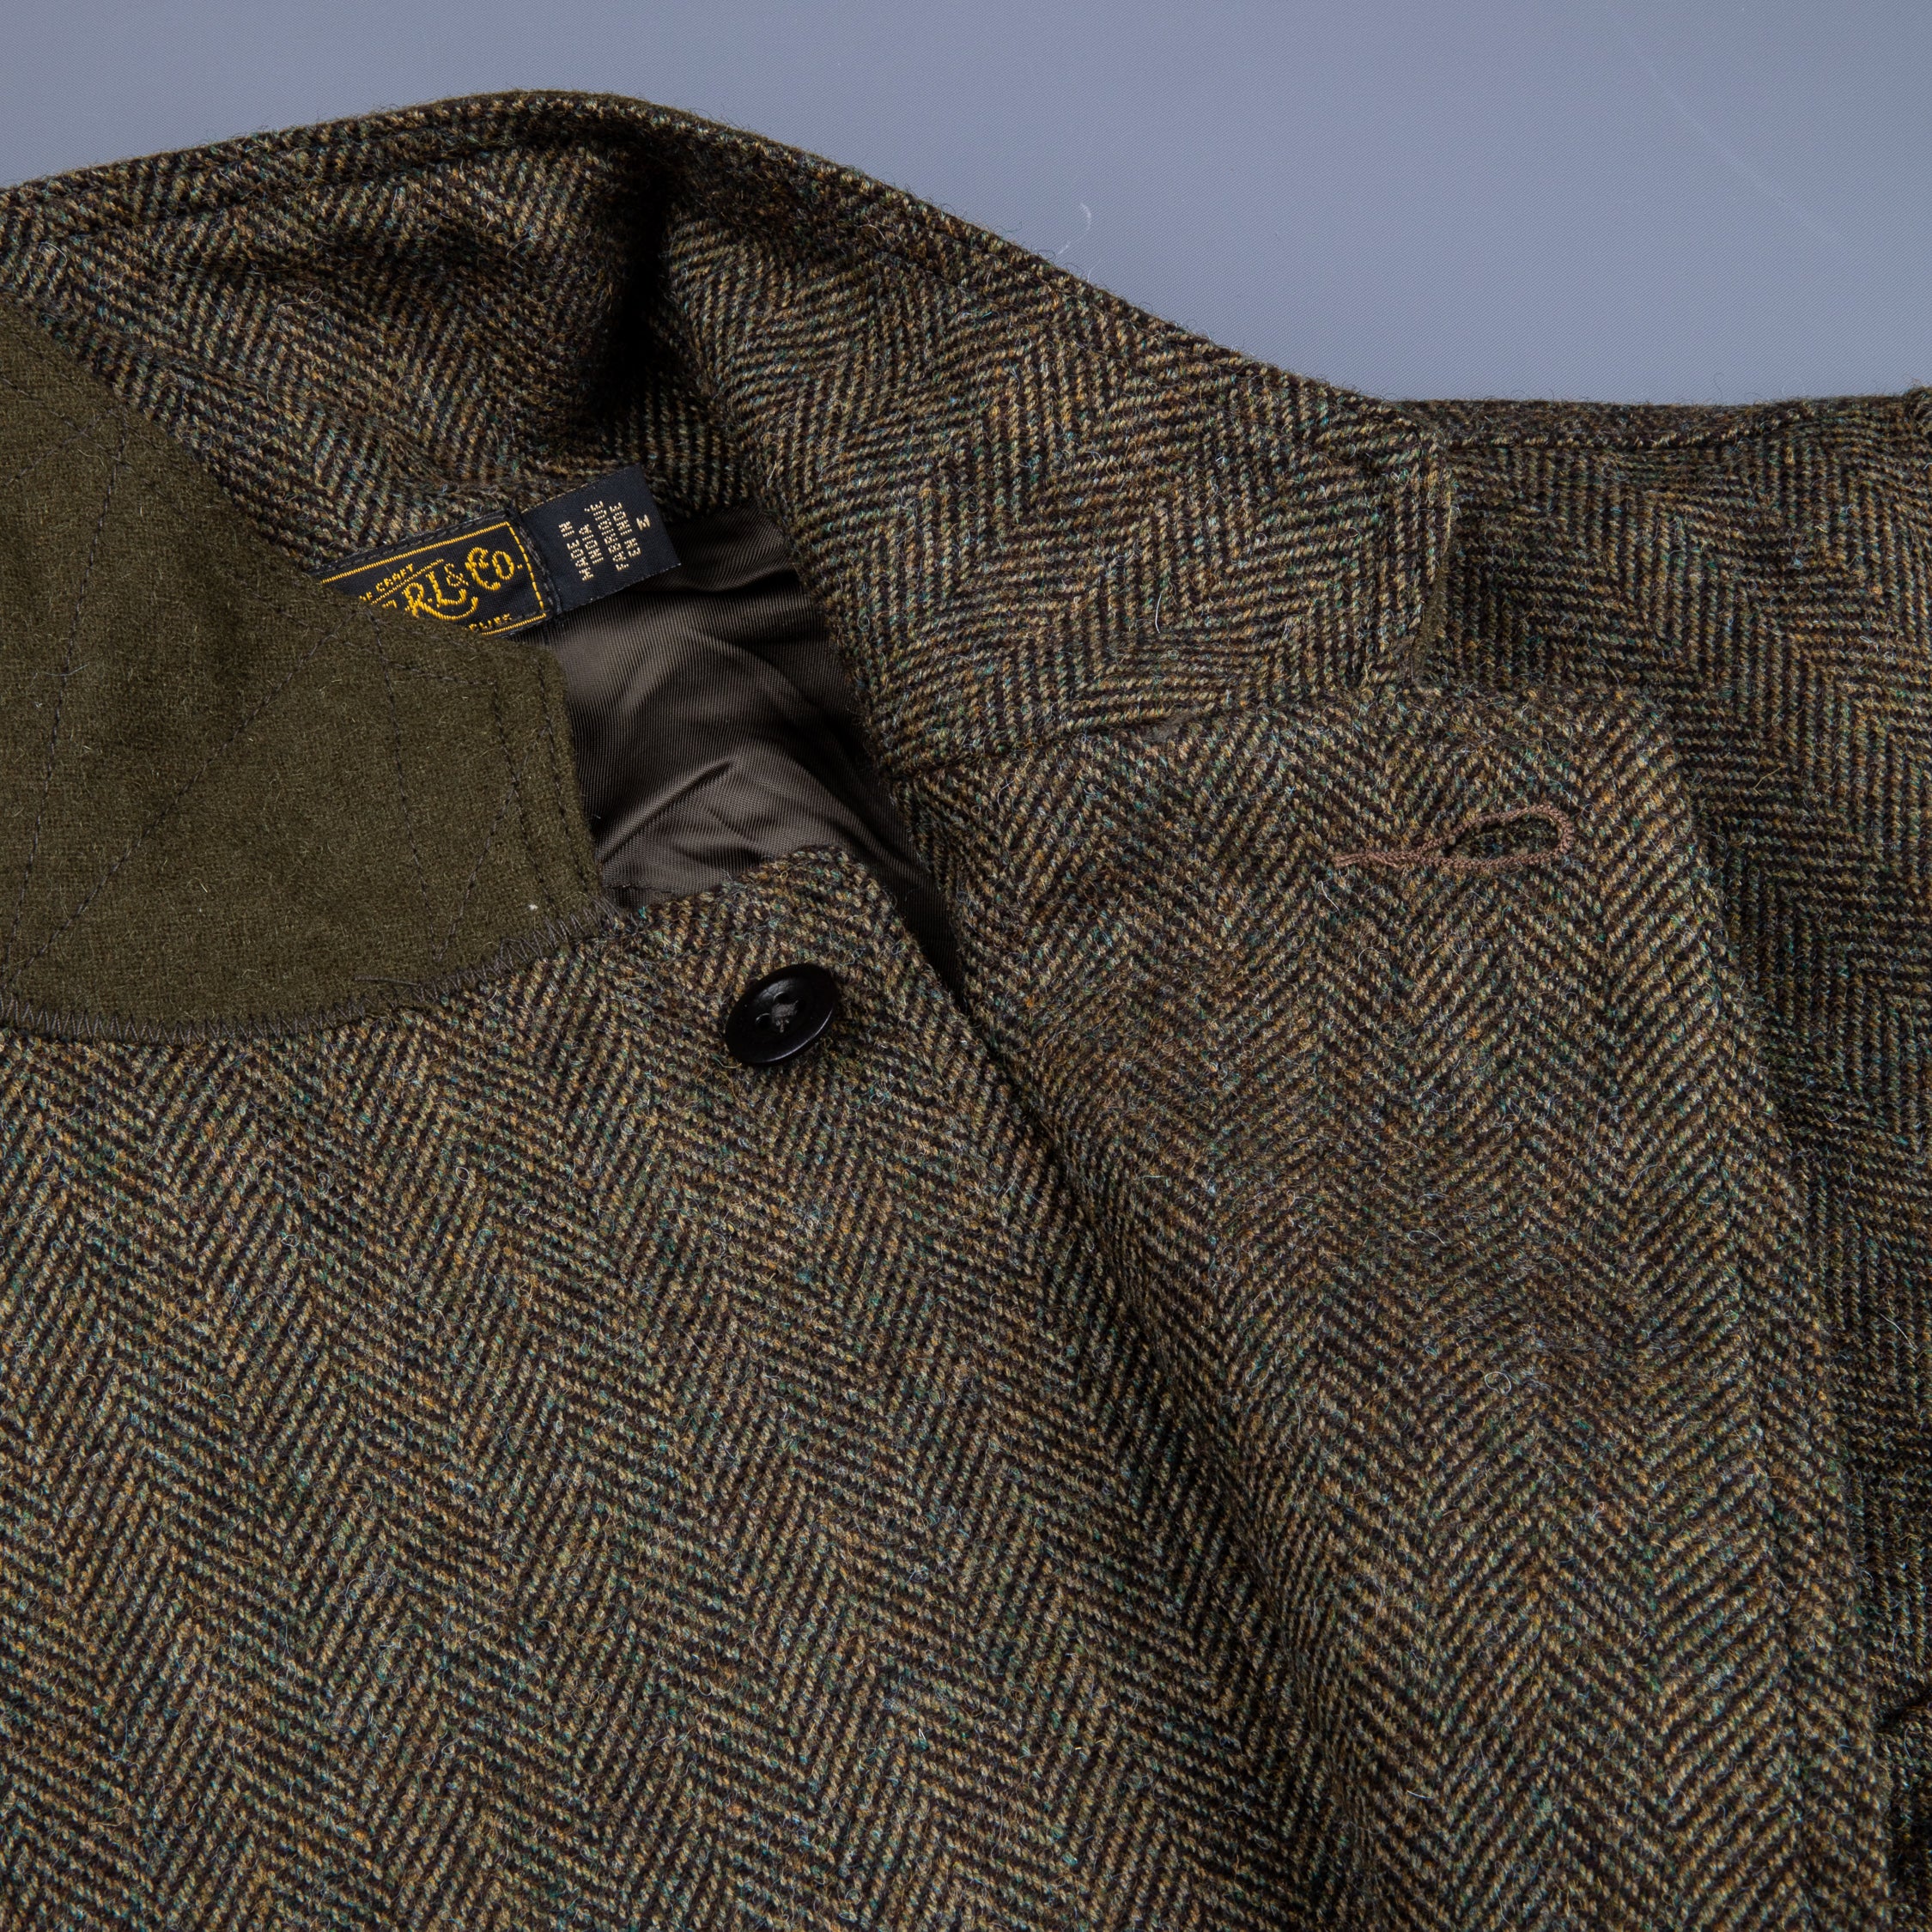 RRL Acklington Sportcoat Wool Cotton Herringbone Vintage Green